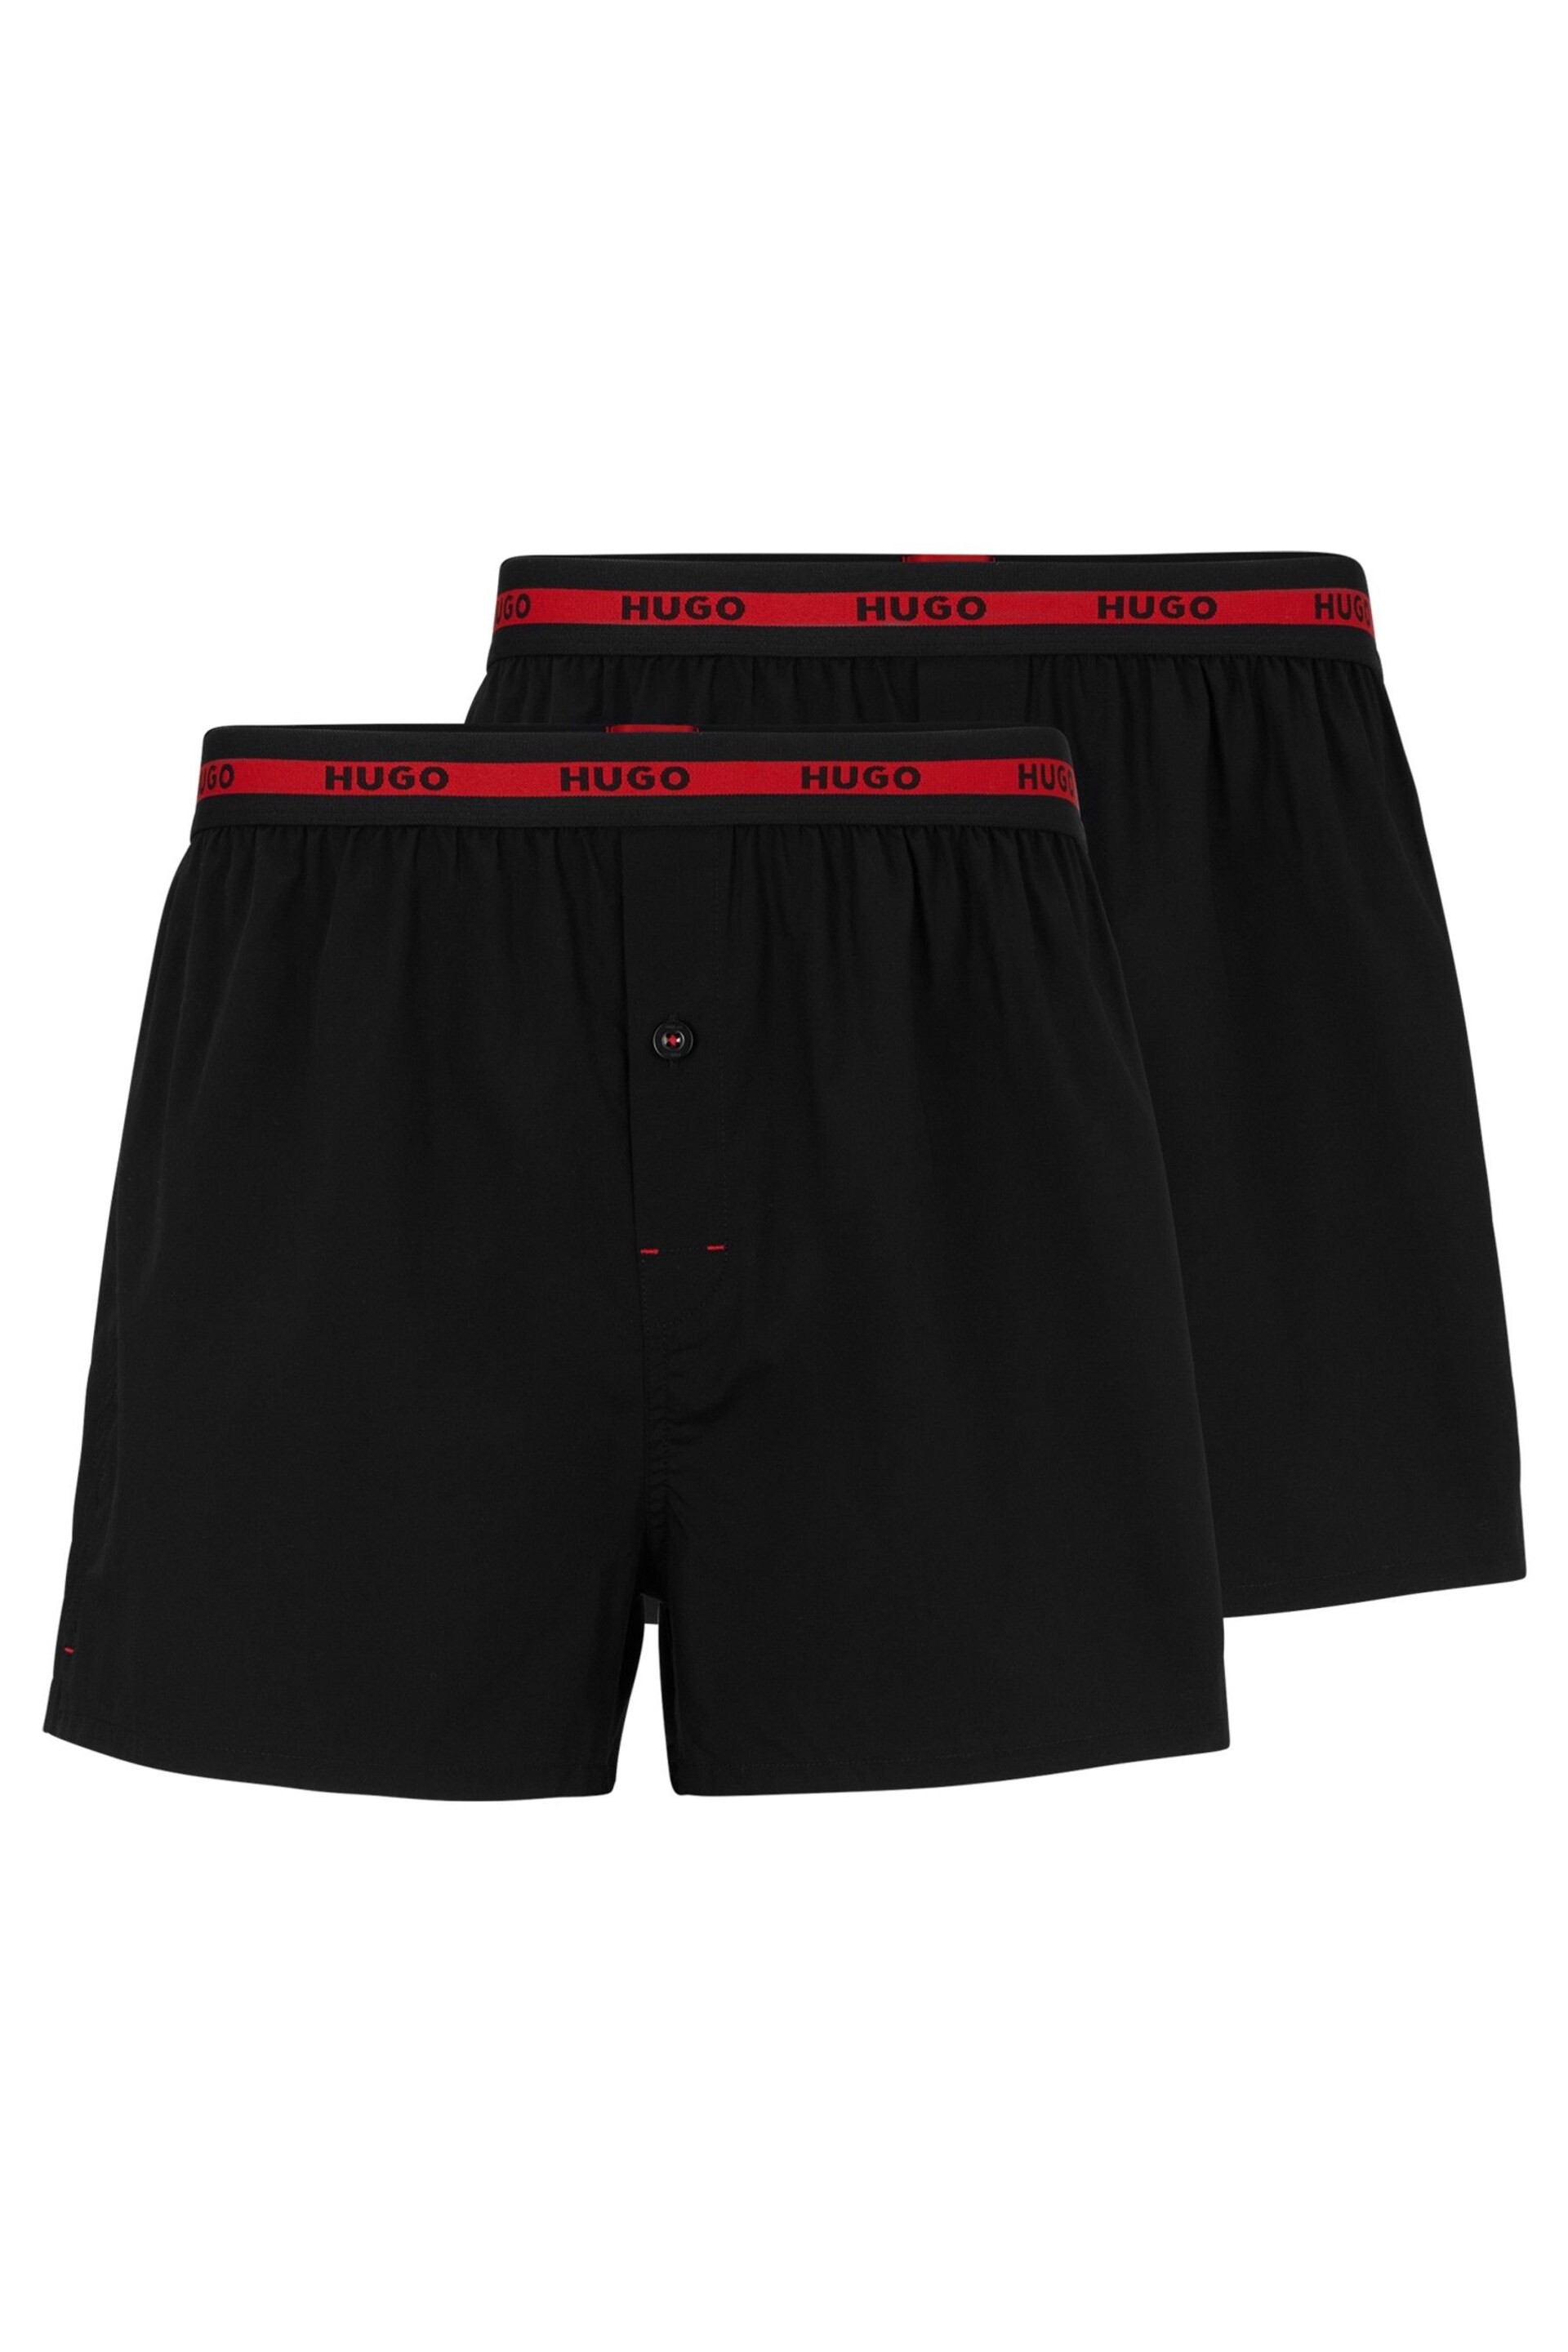 HUGO Woven Boxer Shorts 2 Pack - Image 2 of 7